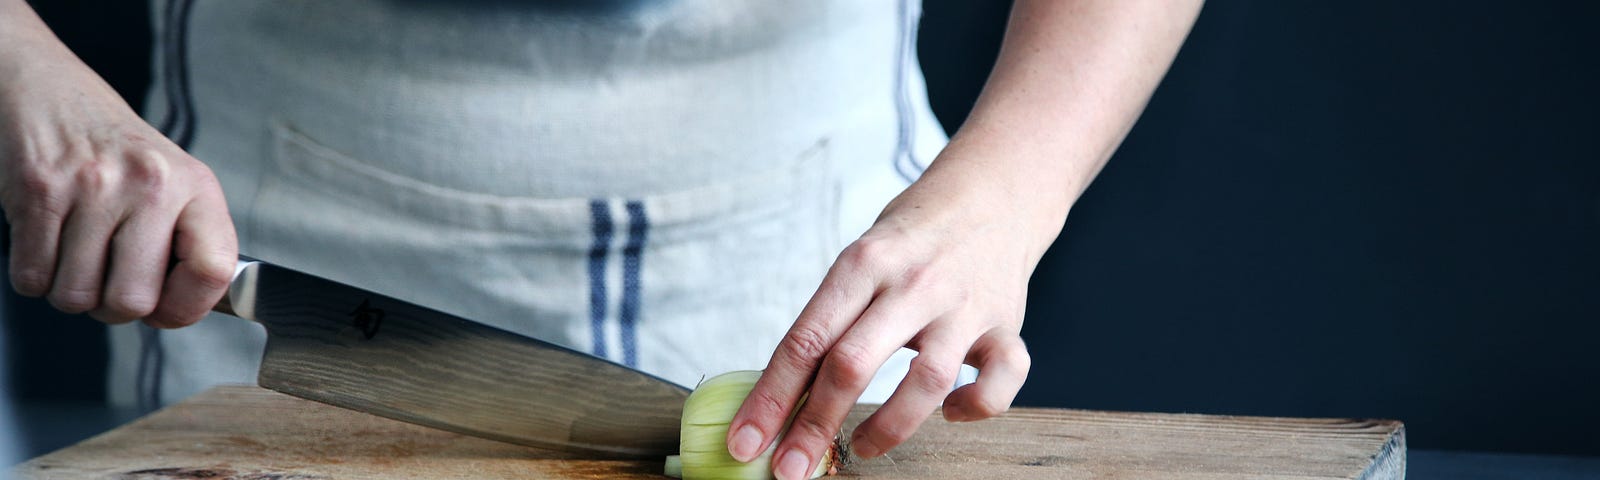 woman chopping onions on a cutting board